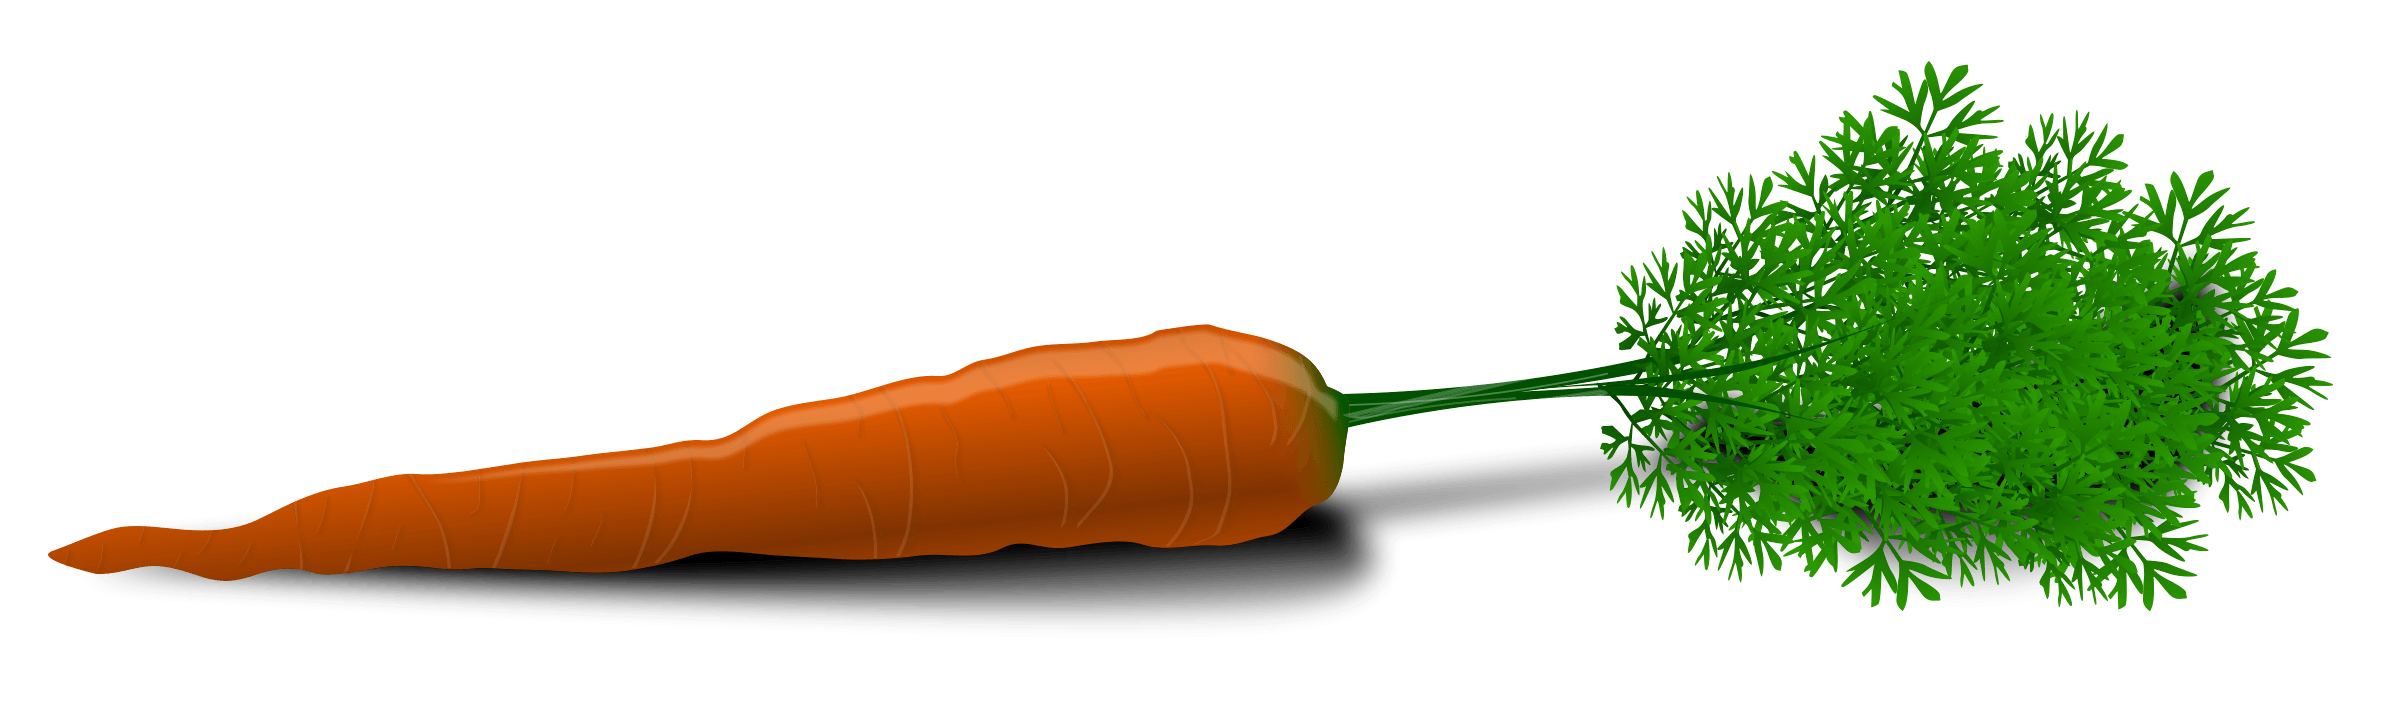 Parsnip Turnip Lifestyle Performance Celery PNG